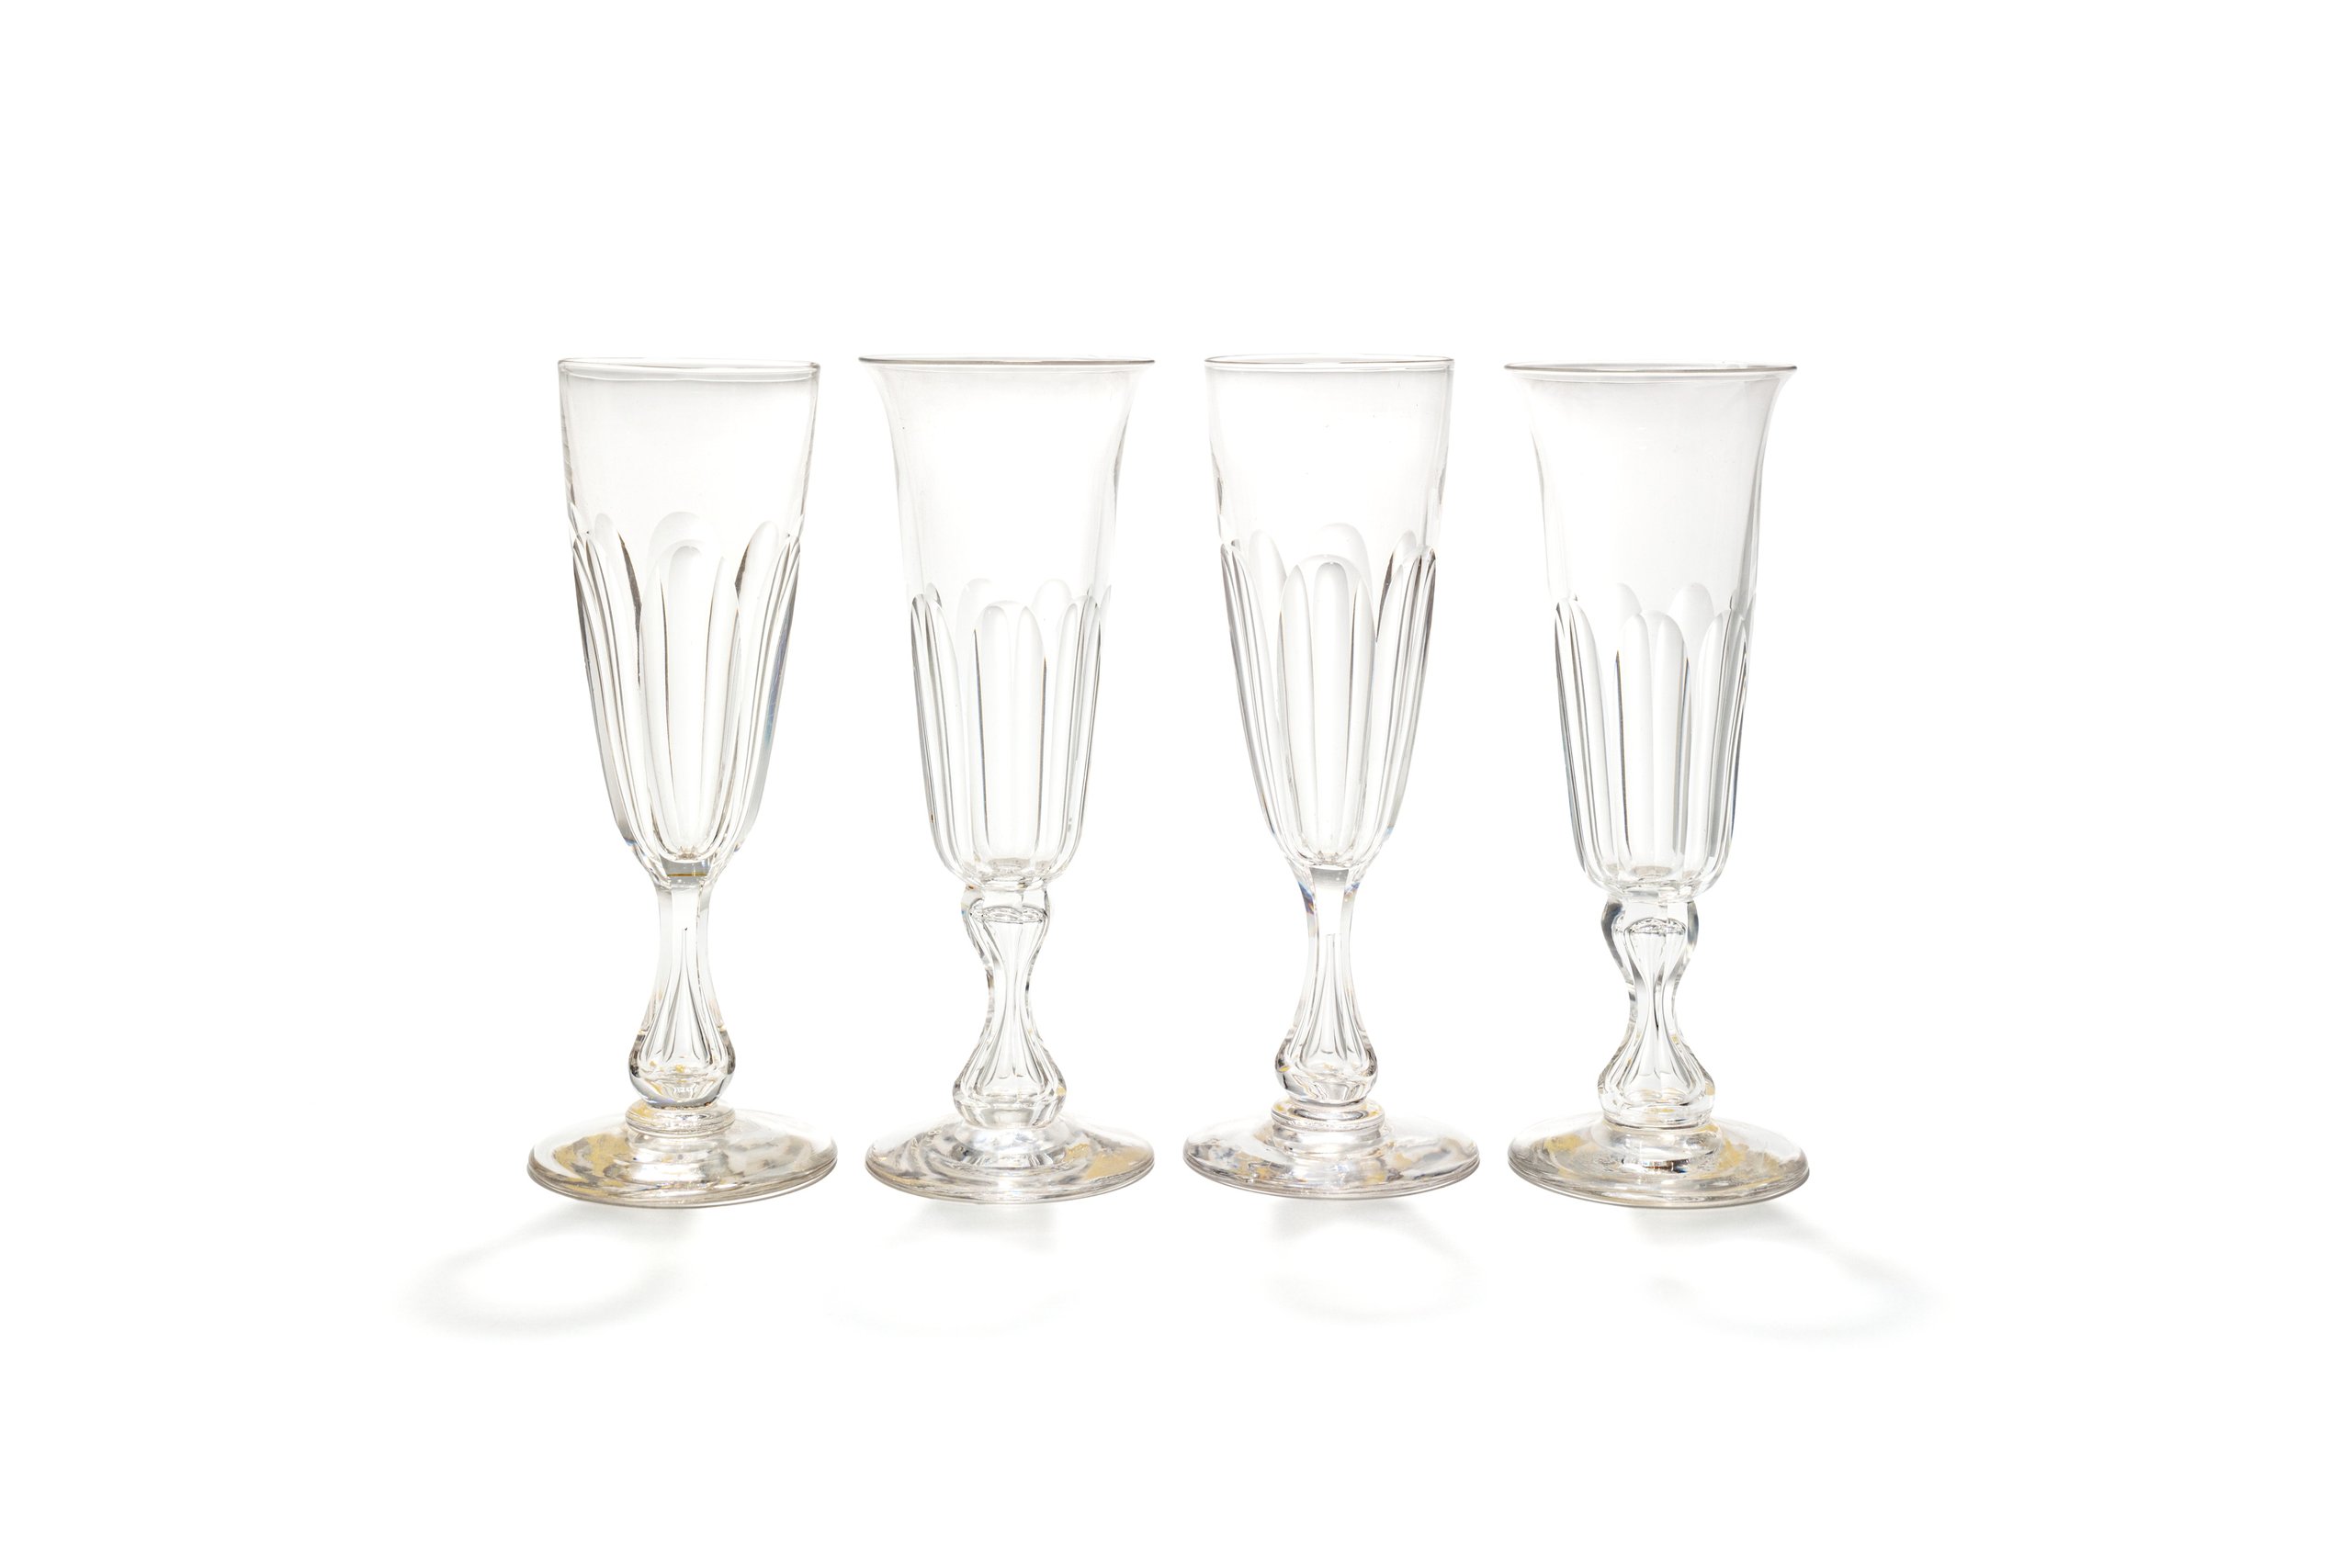 Four English champagne glasses